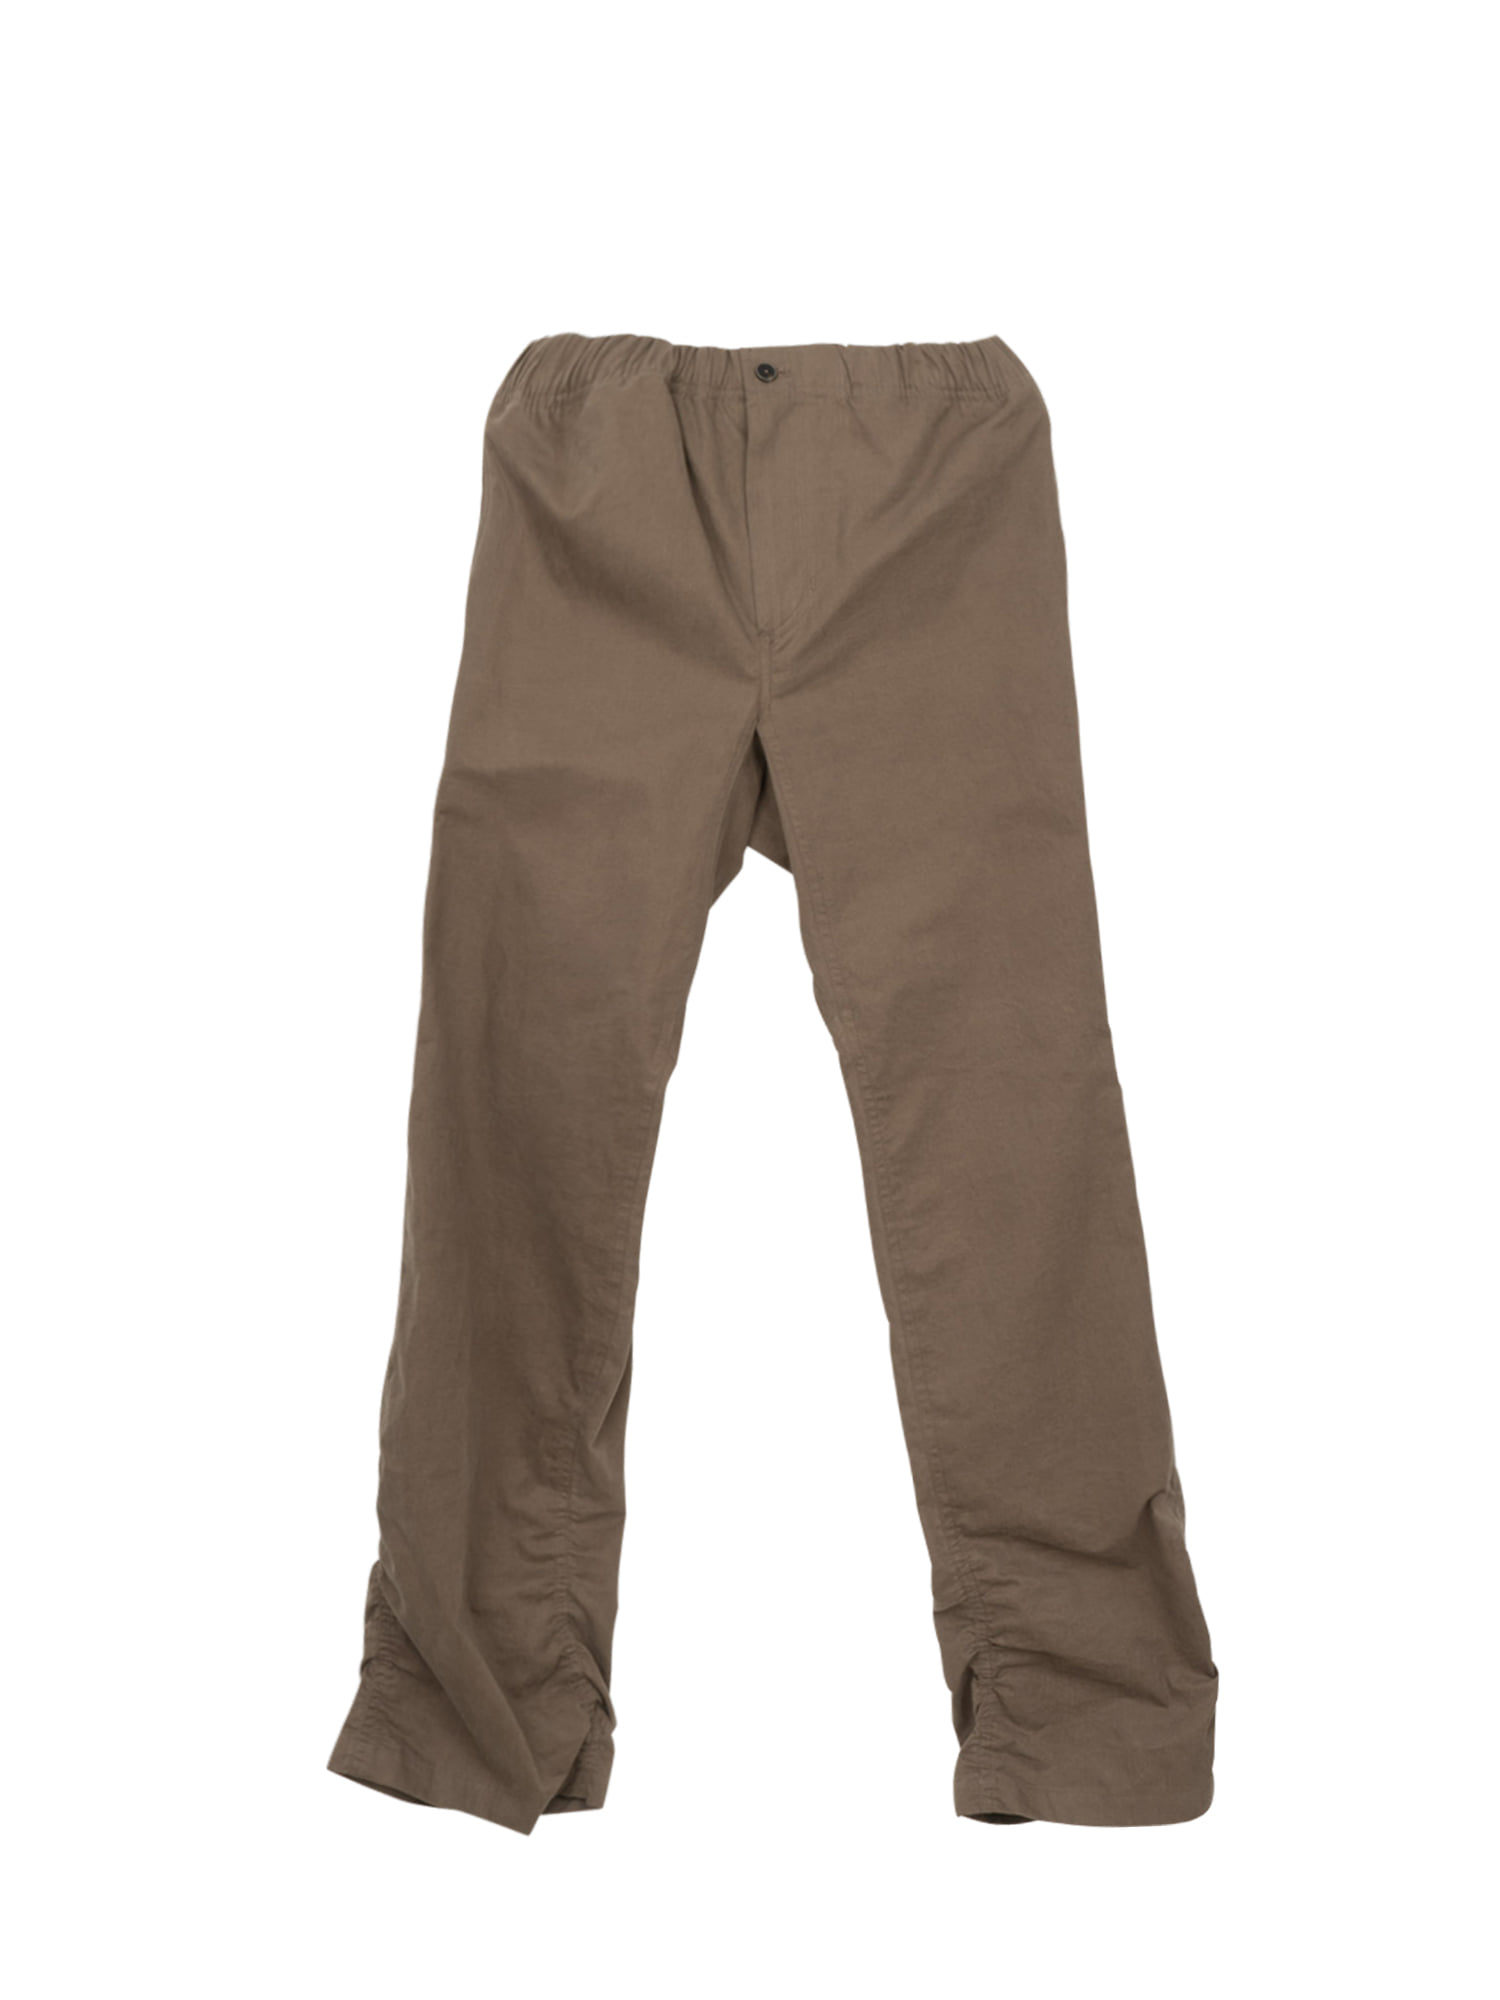 Peach Cotton Shirring Pants - Khaki Brown